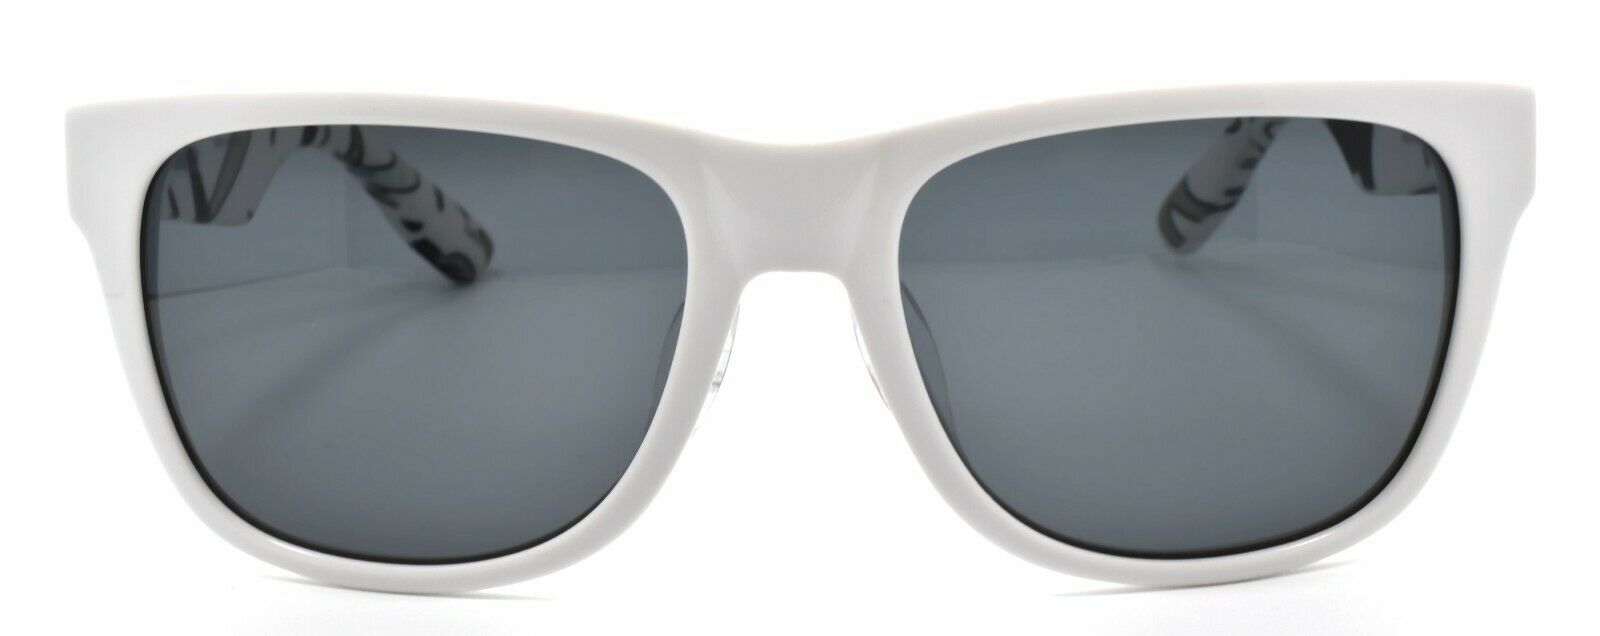 2-McQ Alexander McQueen MQ0018SA 003 Women's Sunglasses White / Gray-889652008578-IKSpecs